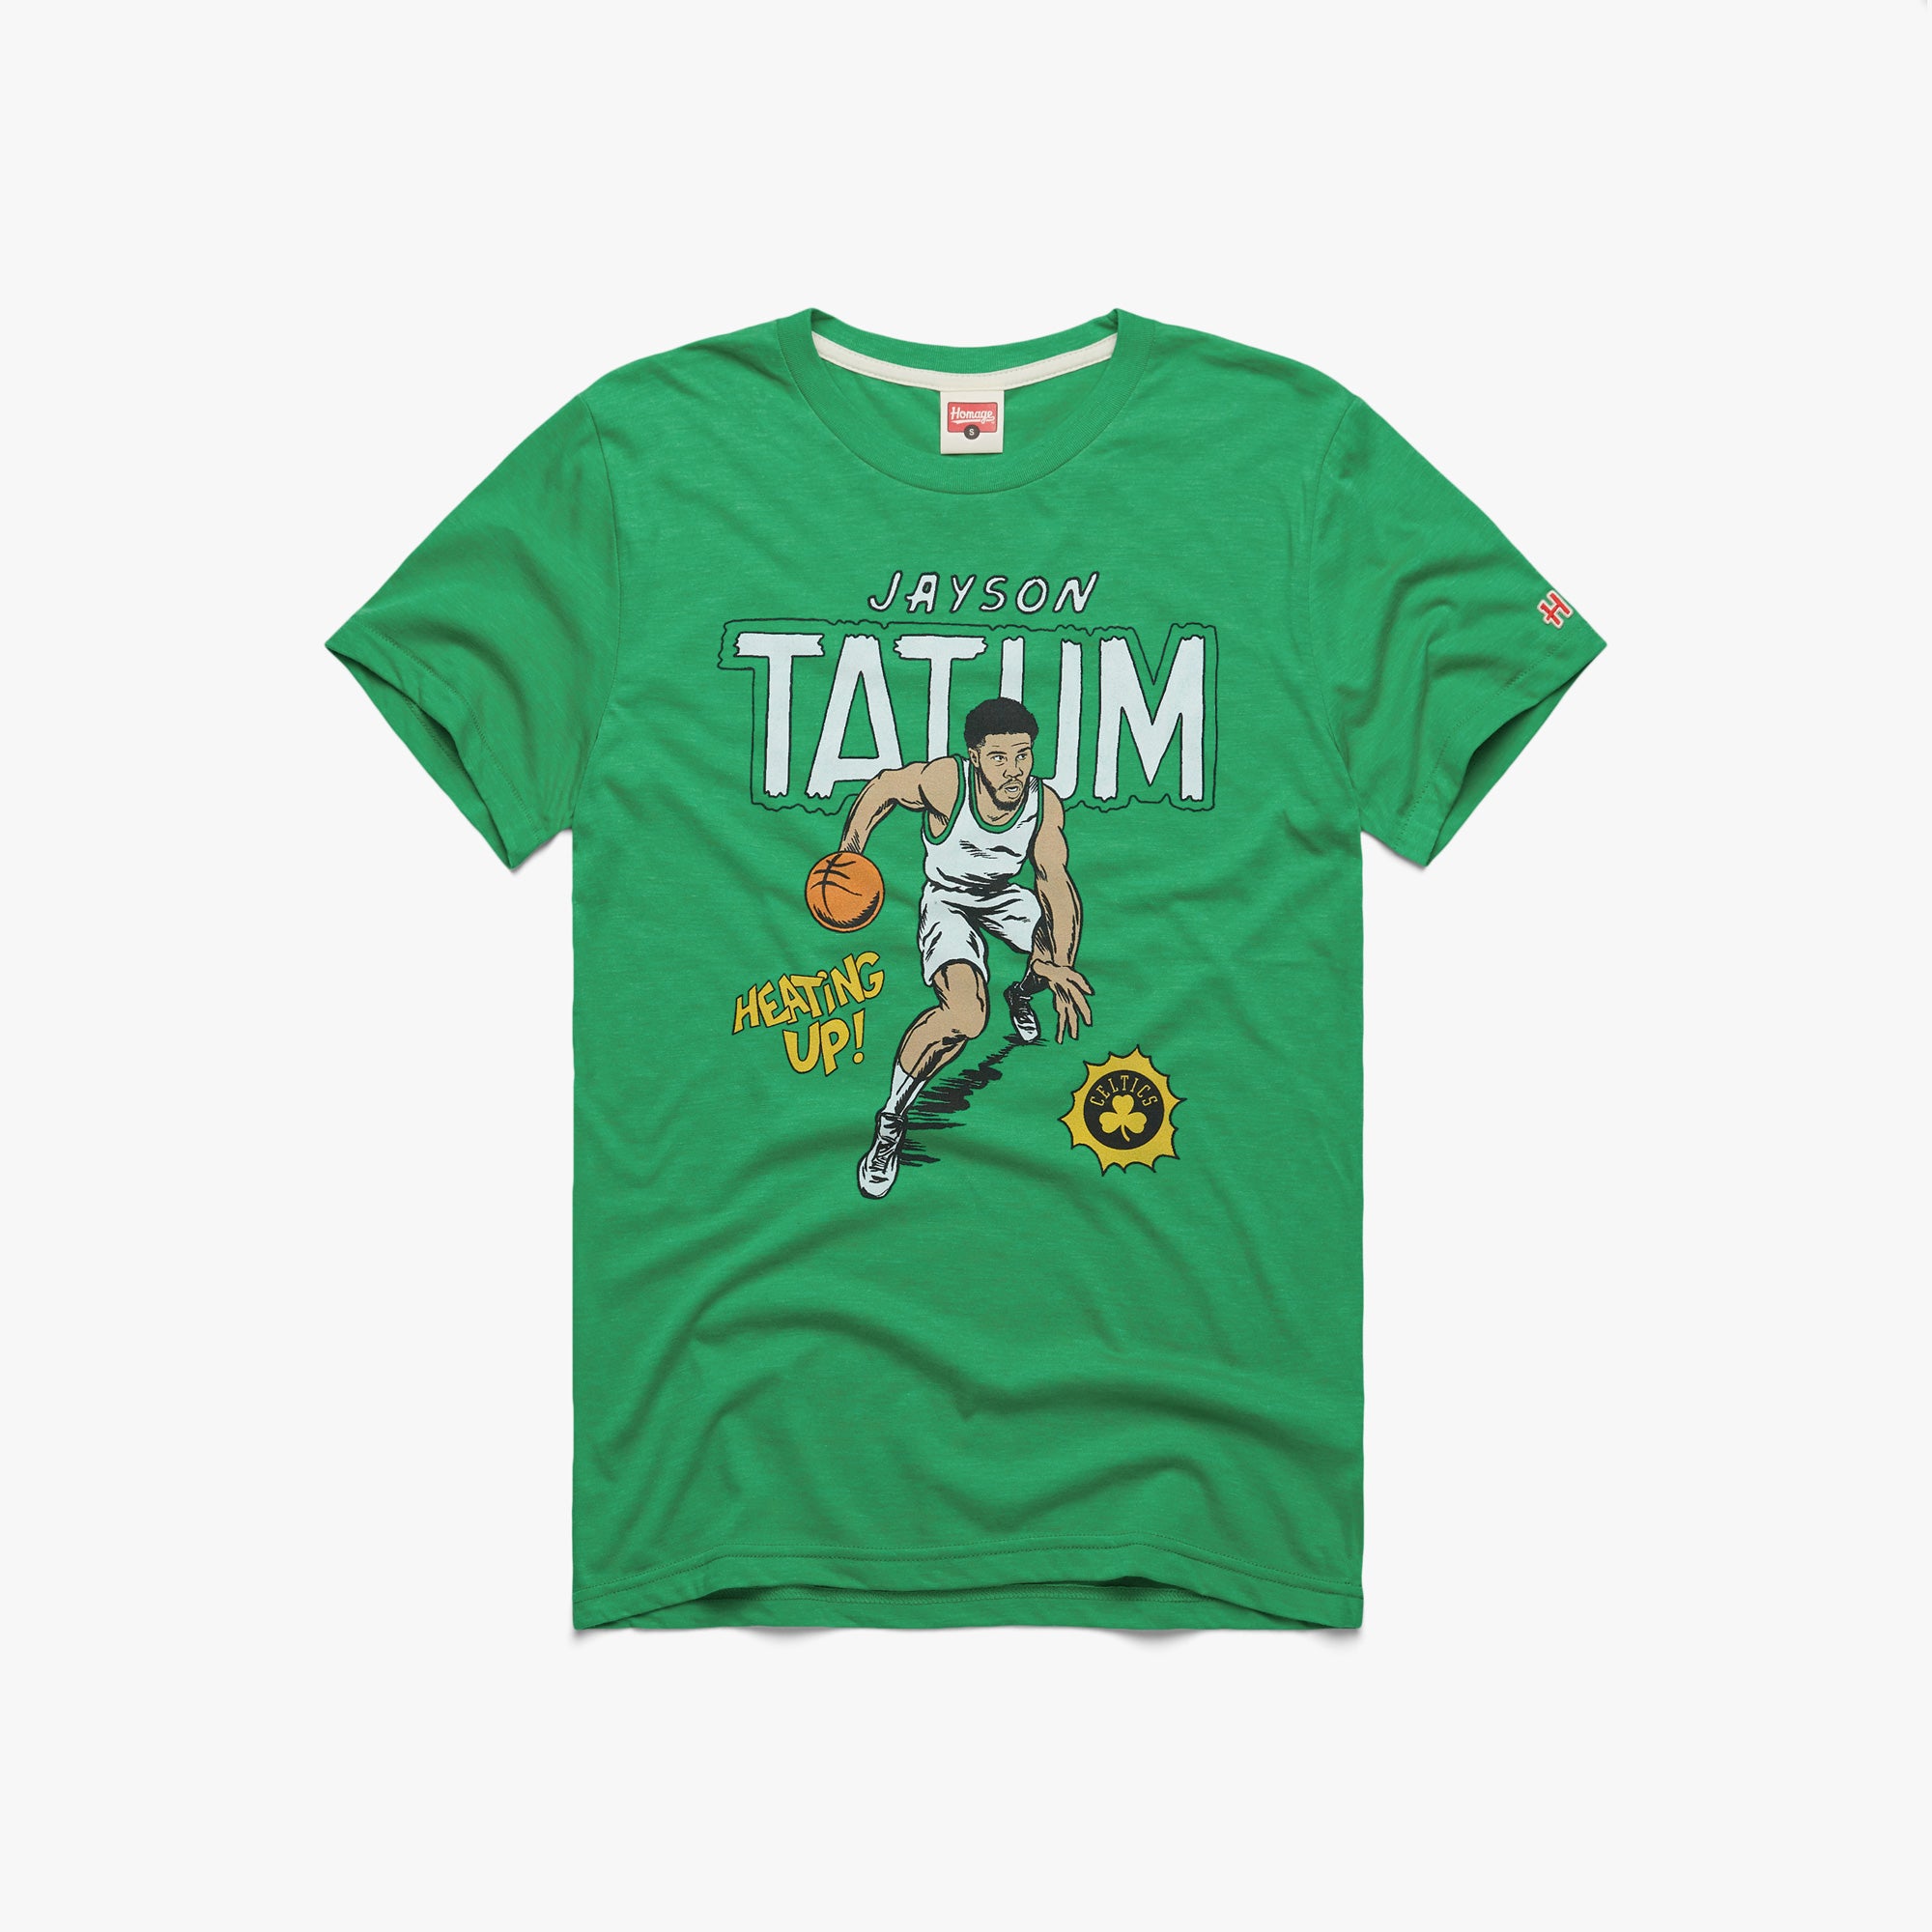 Michael Pina on X: Jayson Tatum wore this shirt today. I